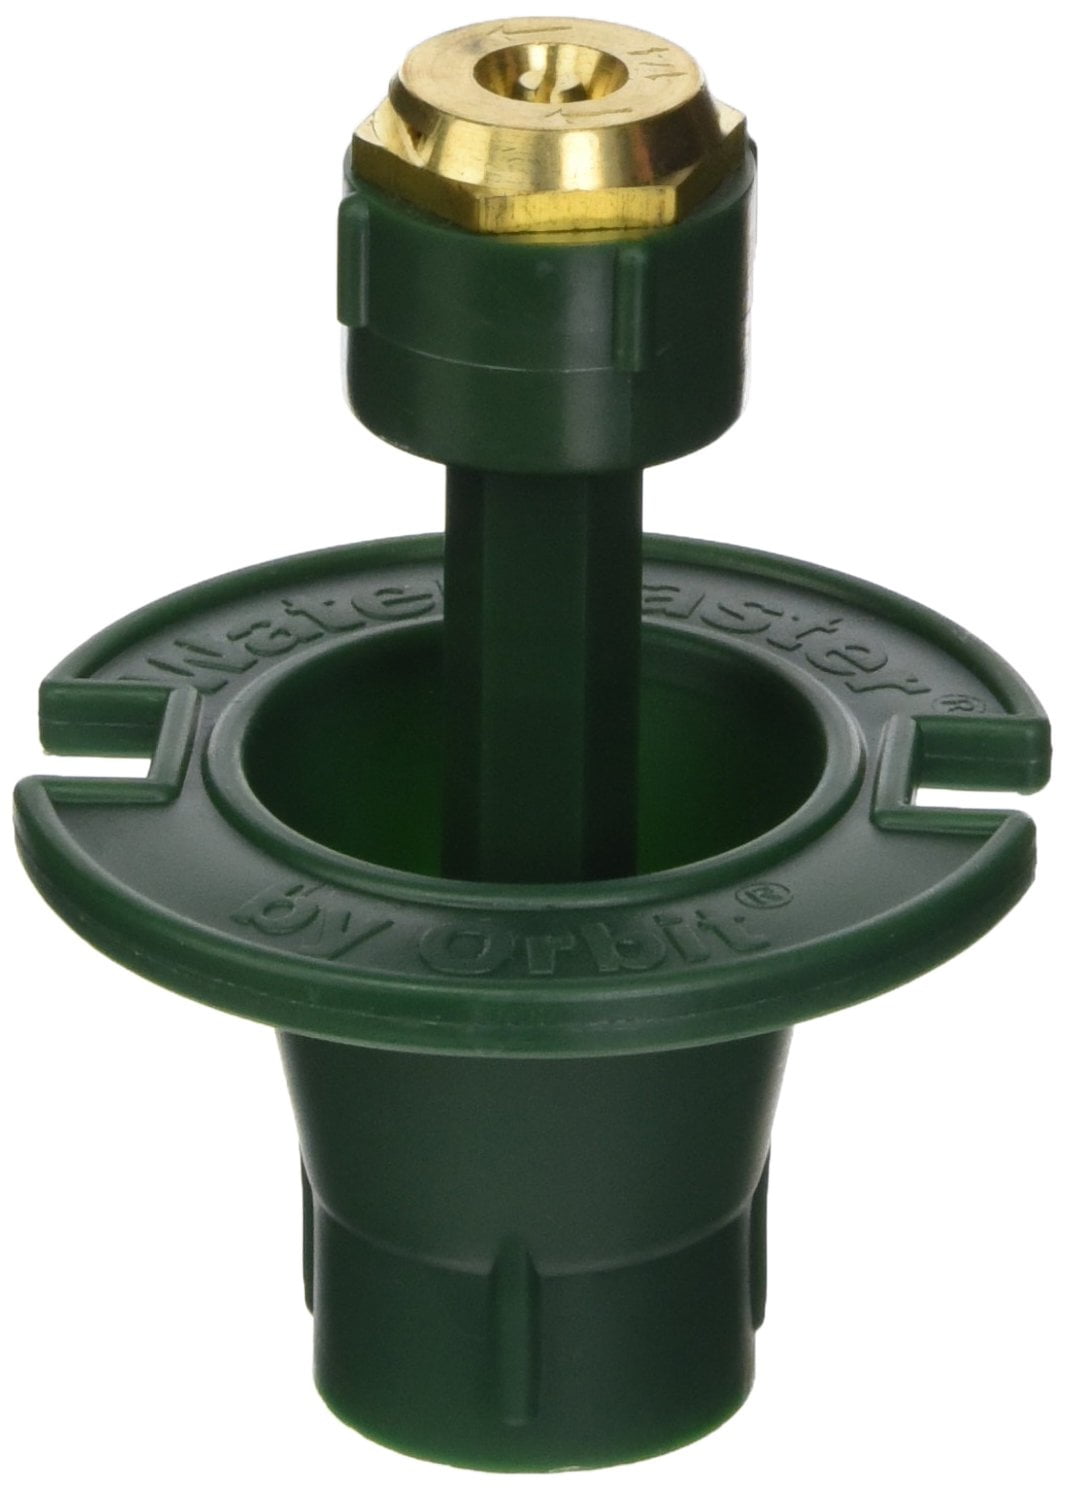 Orbit Brass 90 Degree Quarter Spray Pattern Pop-Up Yard Sprinkler Head 54072 